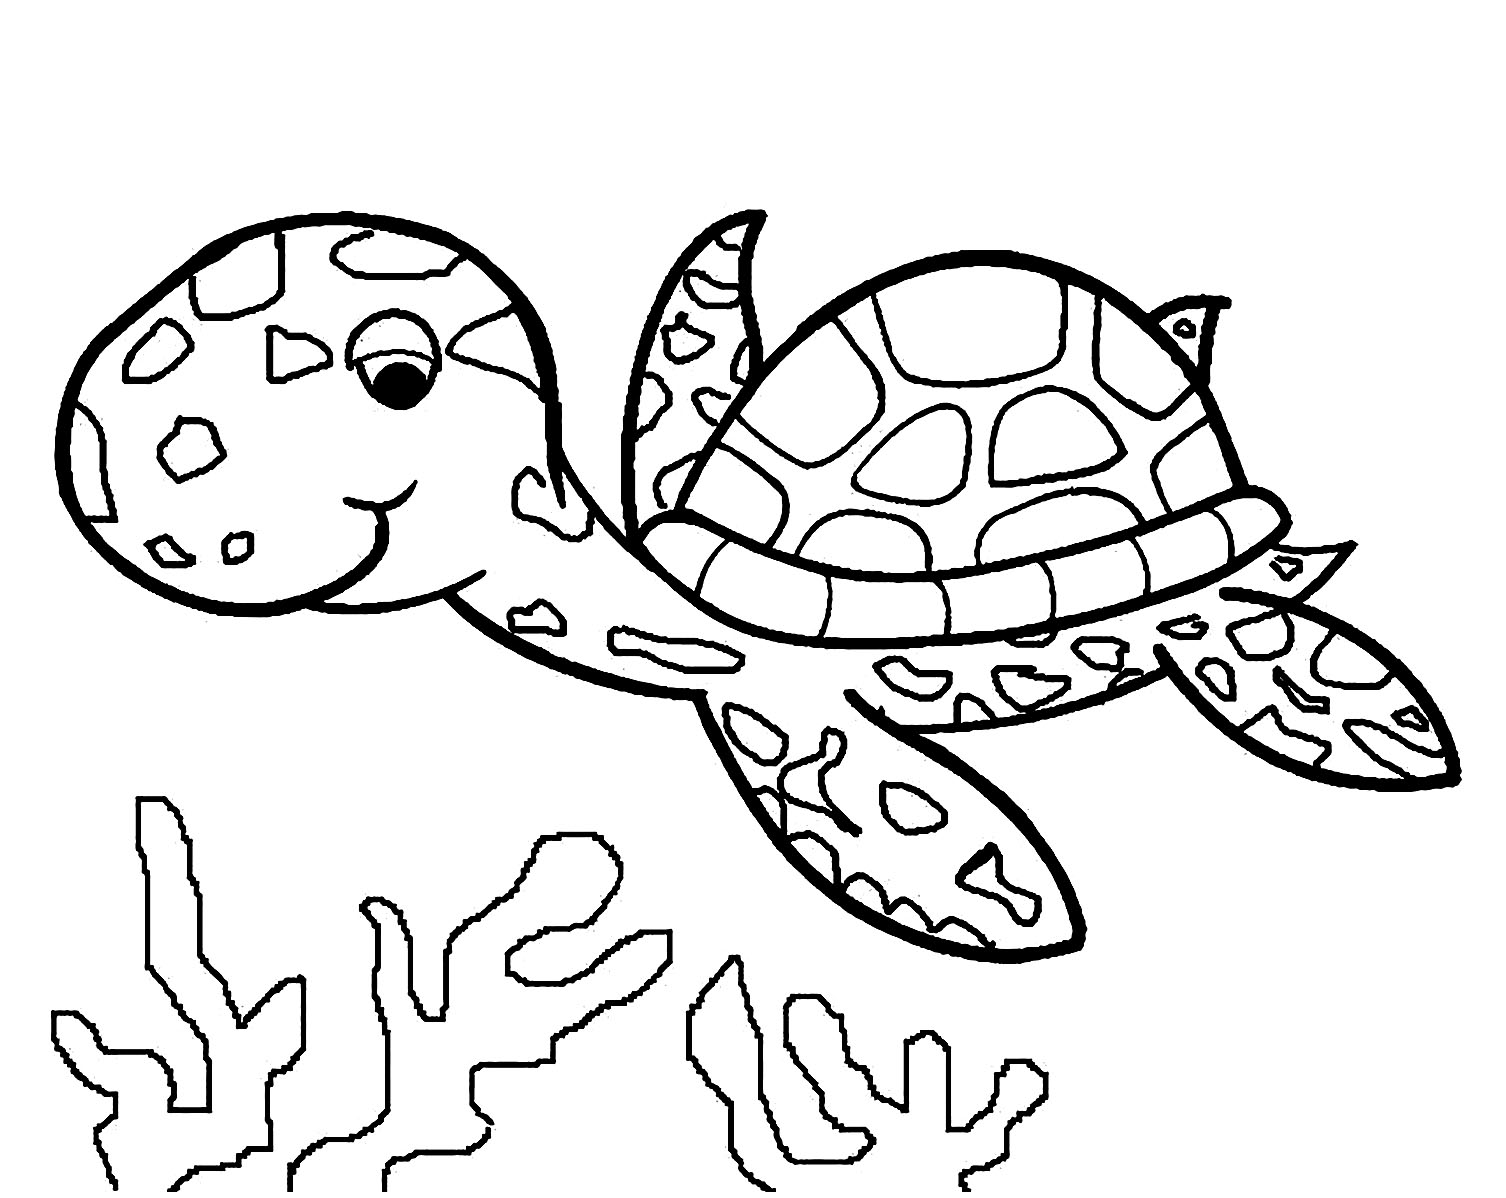 Descargar e imprimir imagen de tortuga para niños